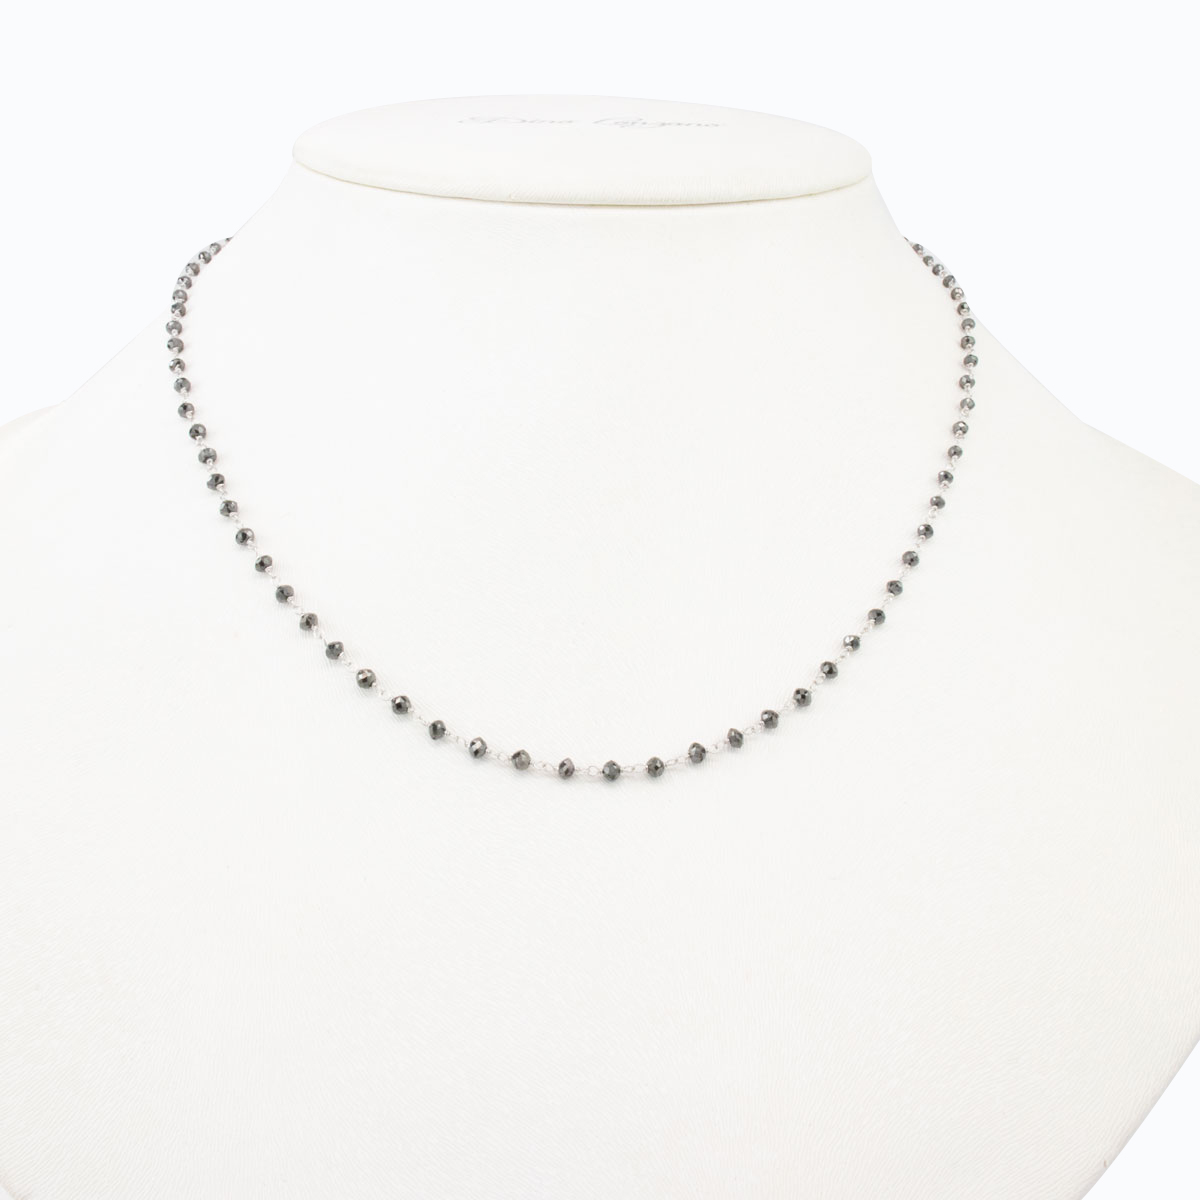 5.3 Carat Black Diamond Necklace, 14k White Gold